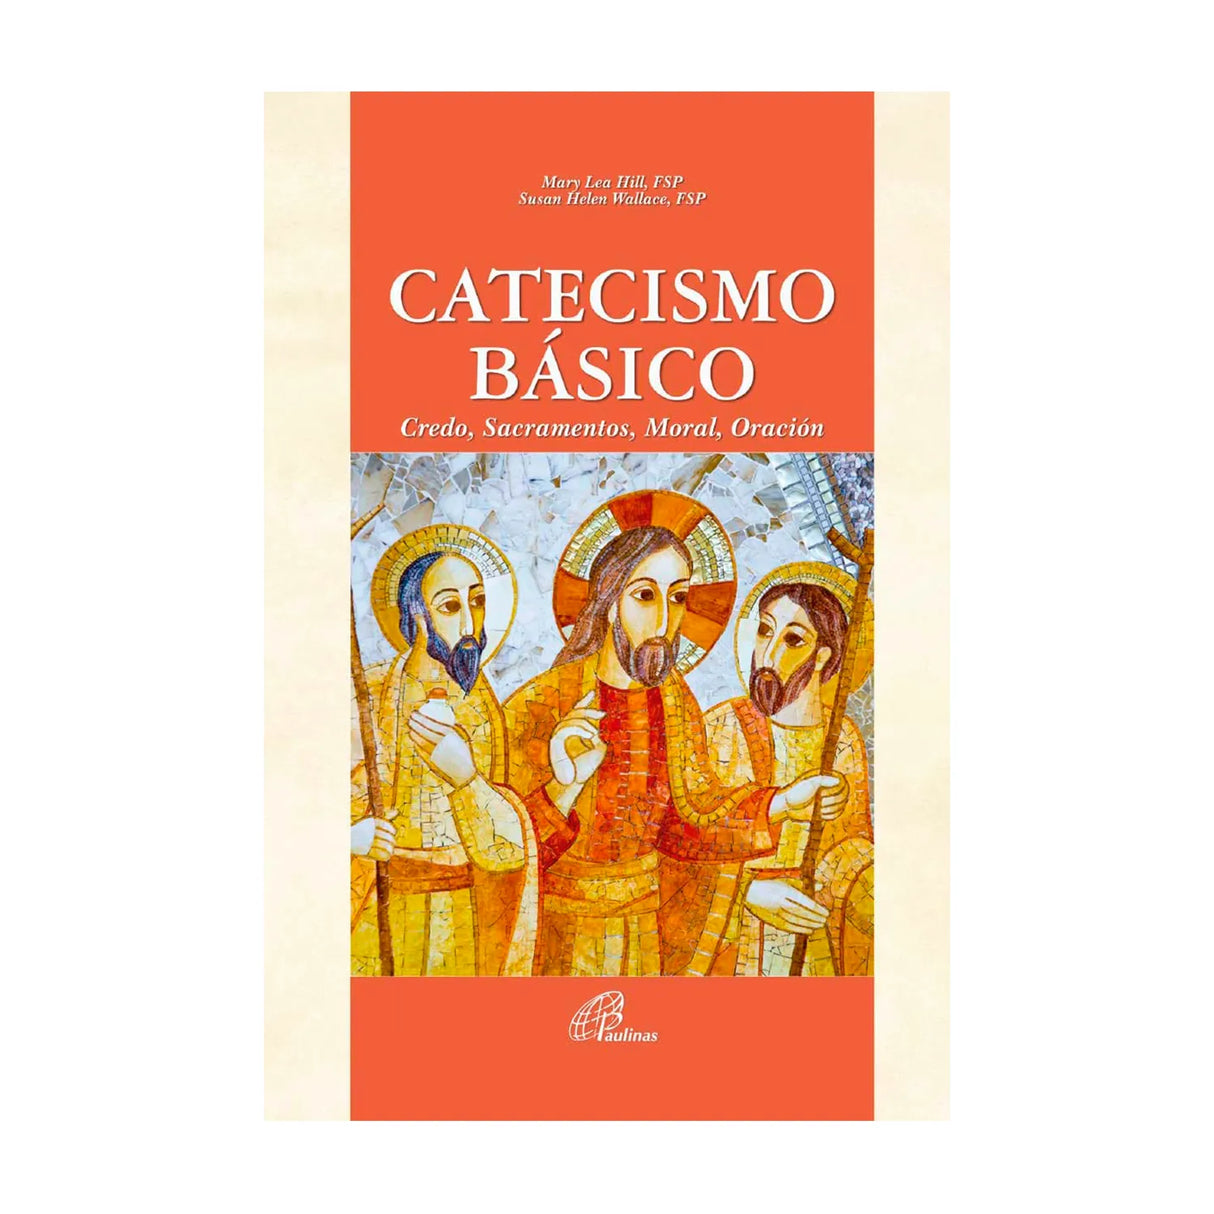 Basic catechism - Creed, sacraments, morals, prayer 